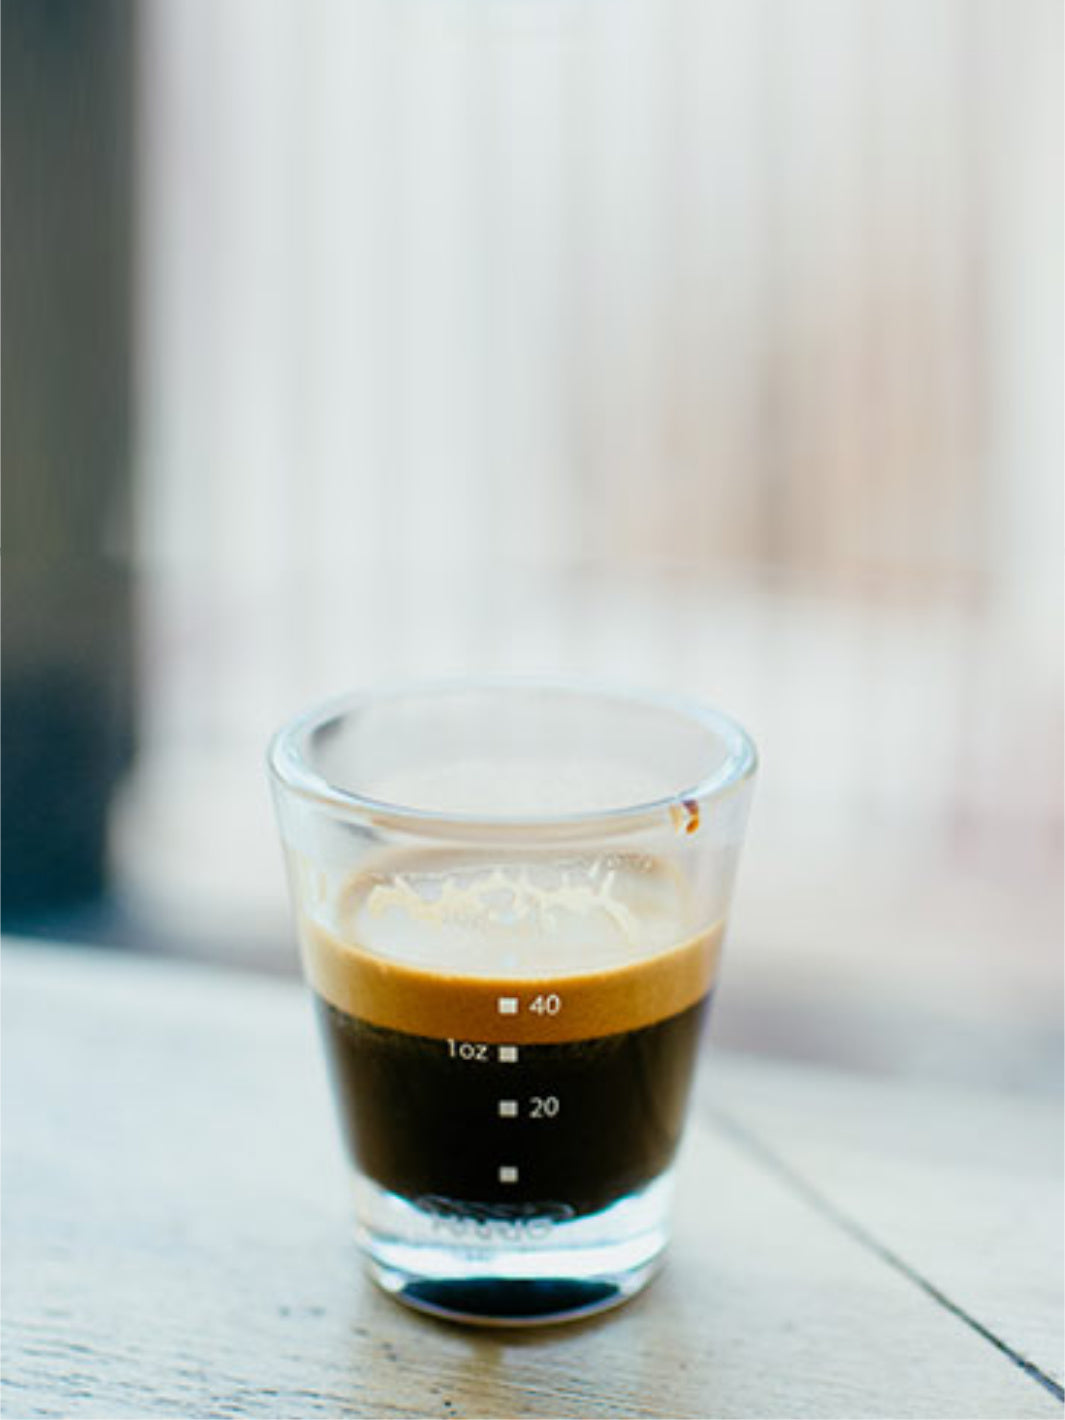 Motta Graduated Espresso Shot Glass - 1st-line Equipment